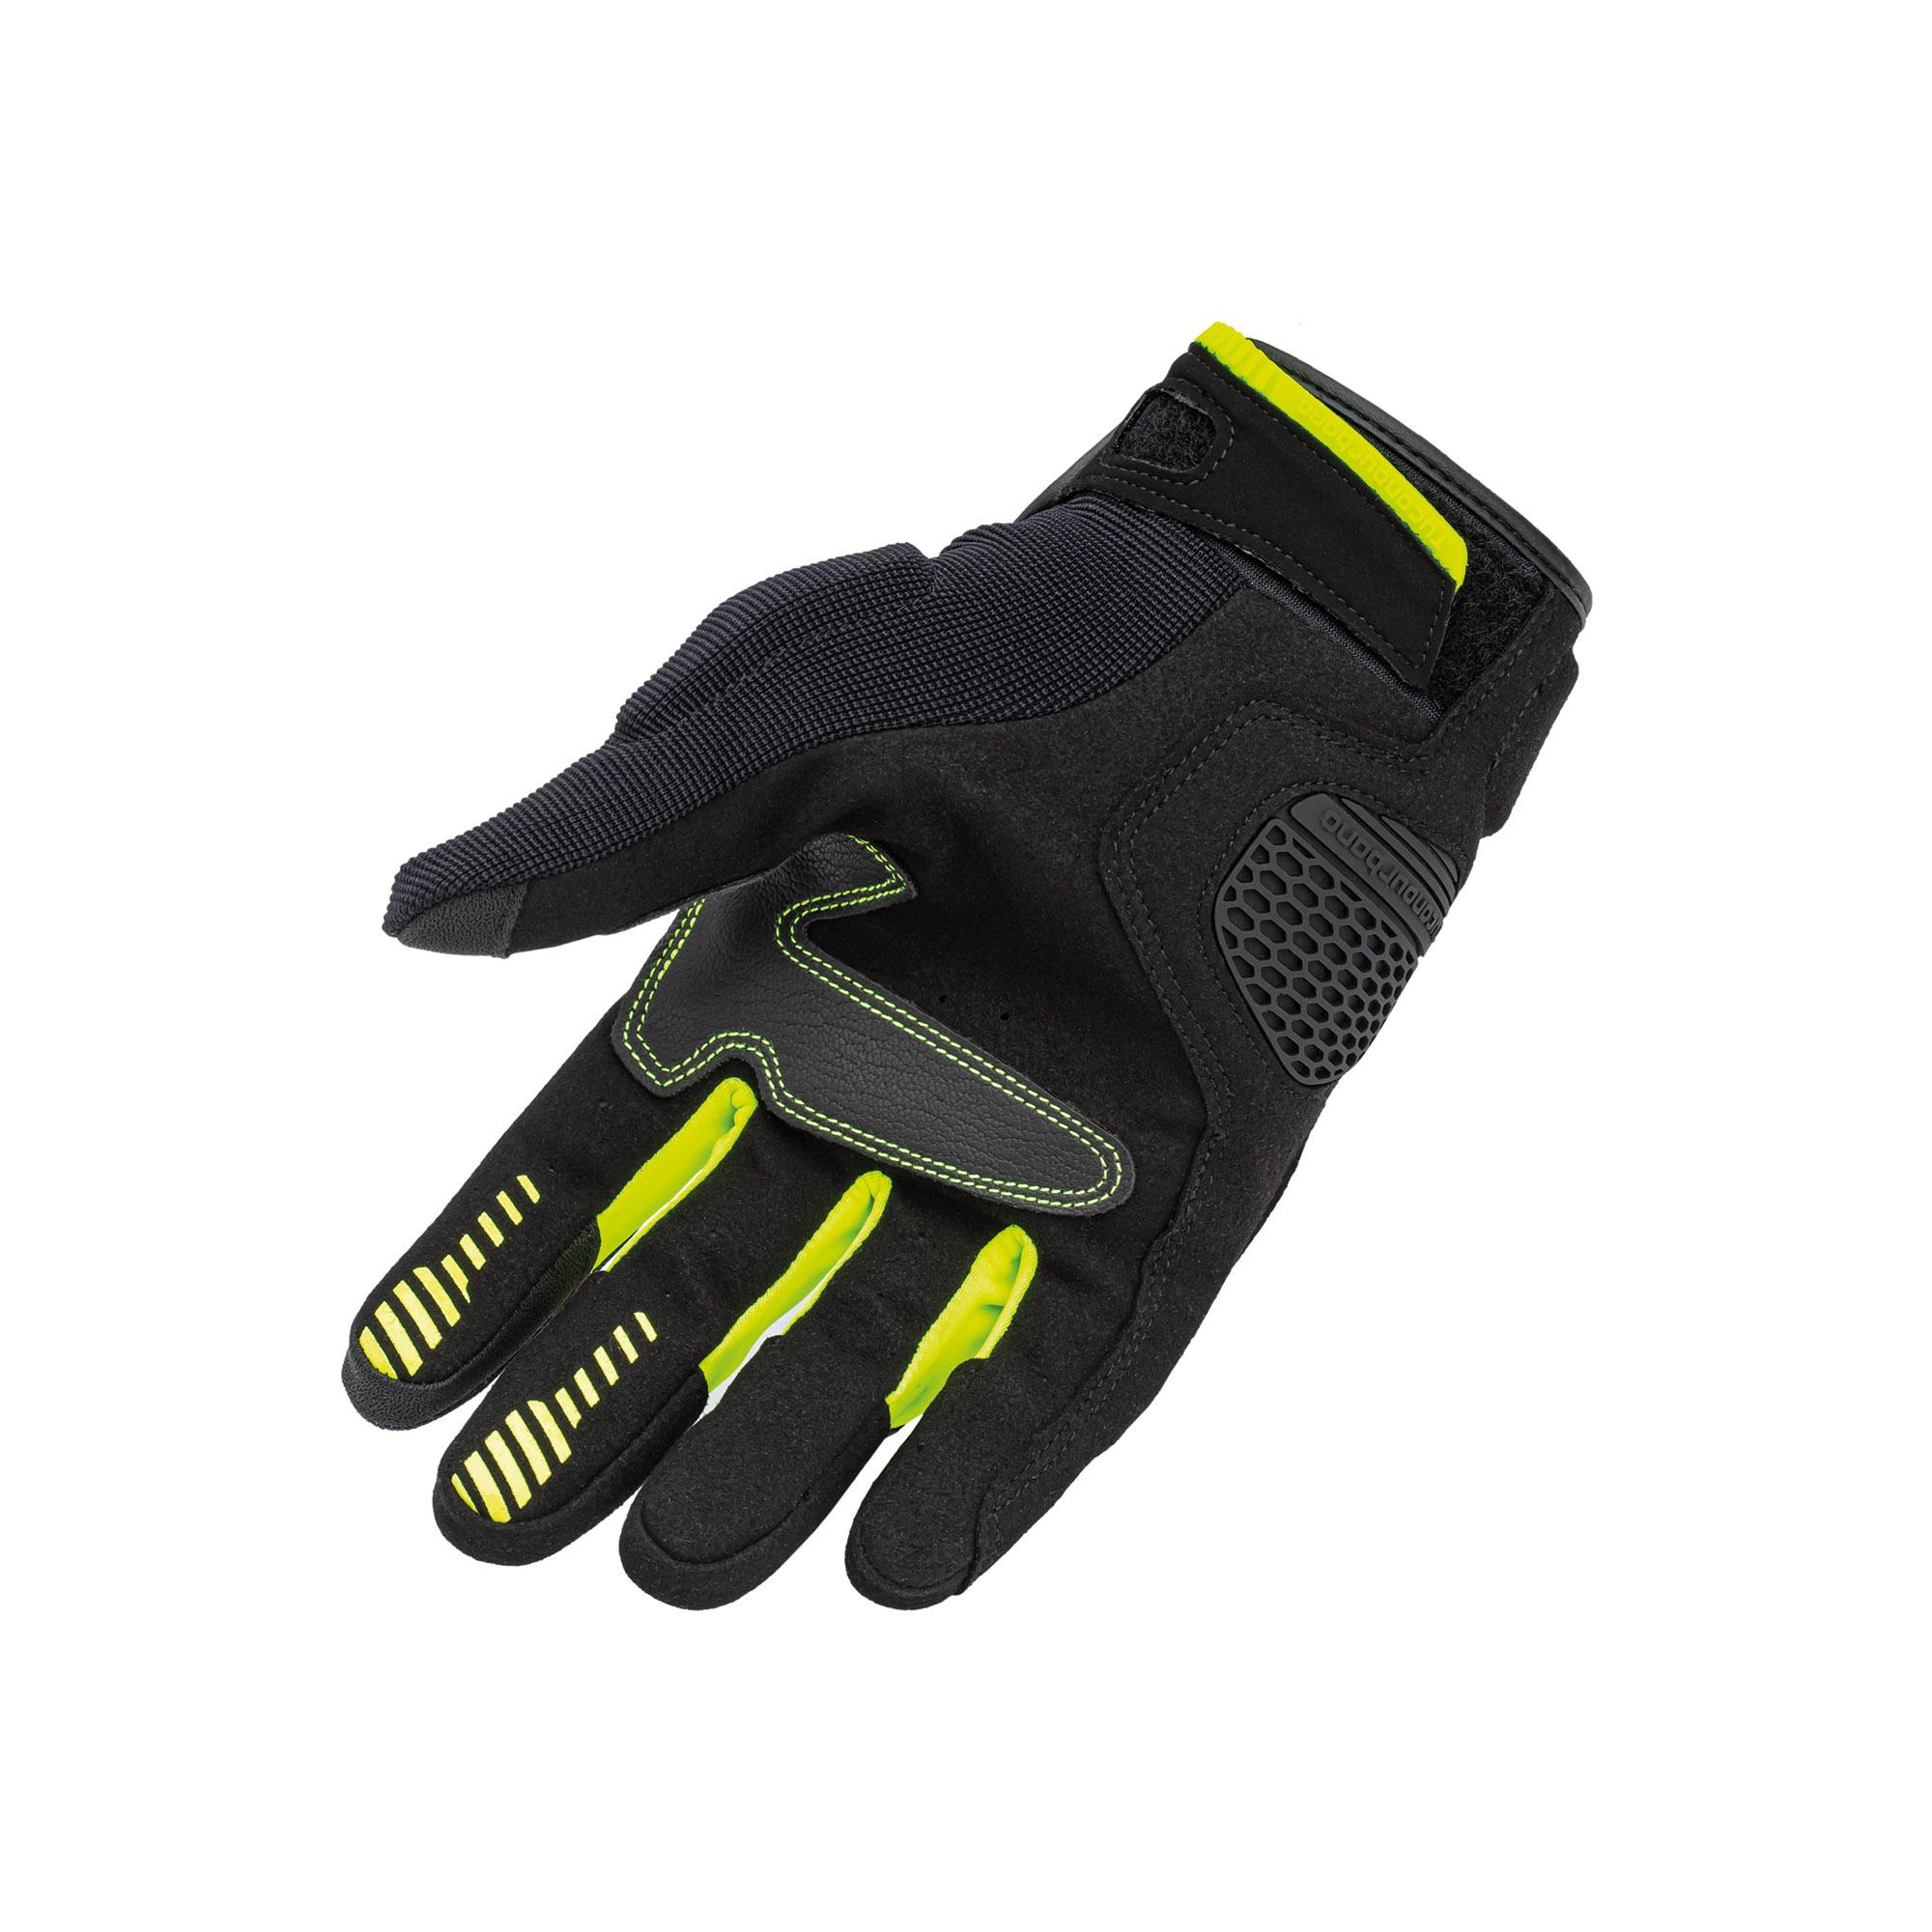 Stacca Gloves Black–Fluorescent Yellow Tucano Urbano